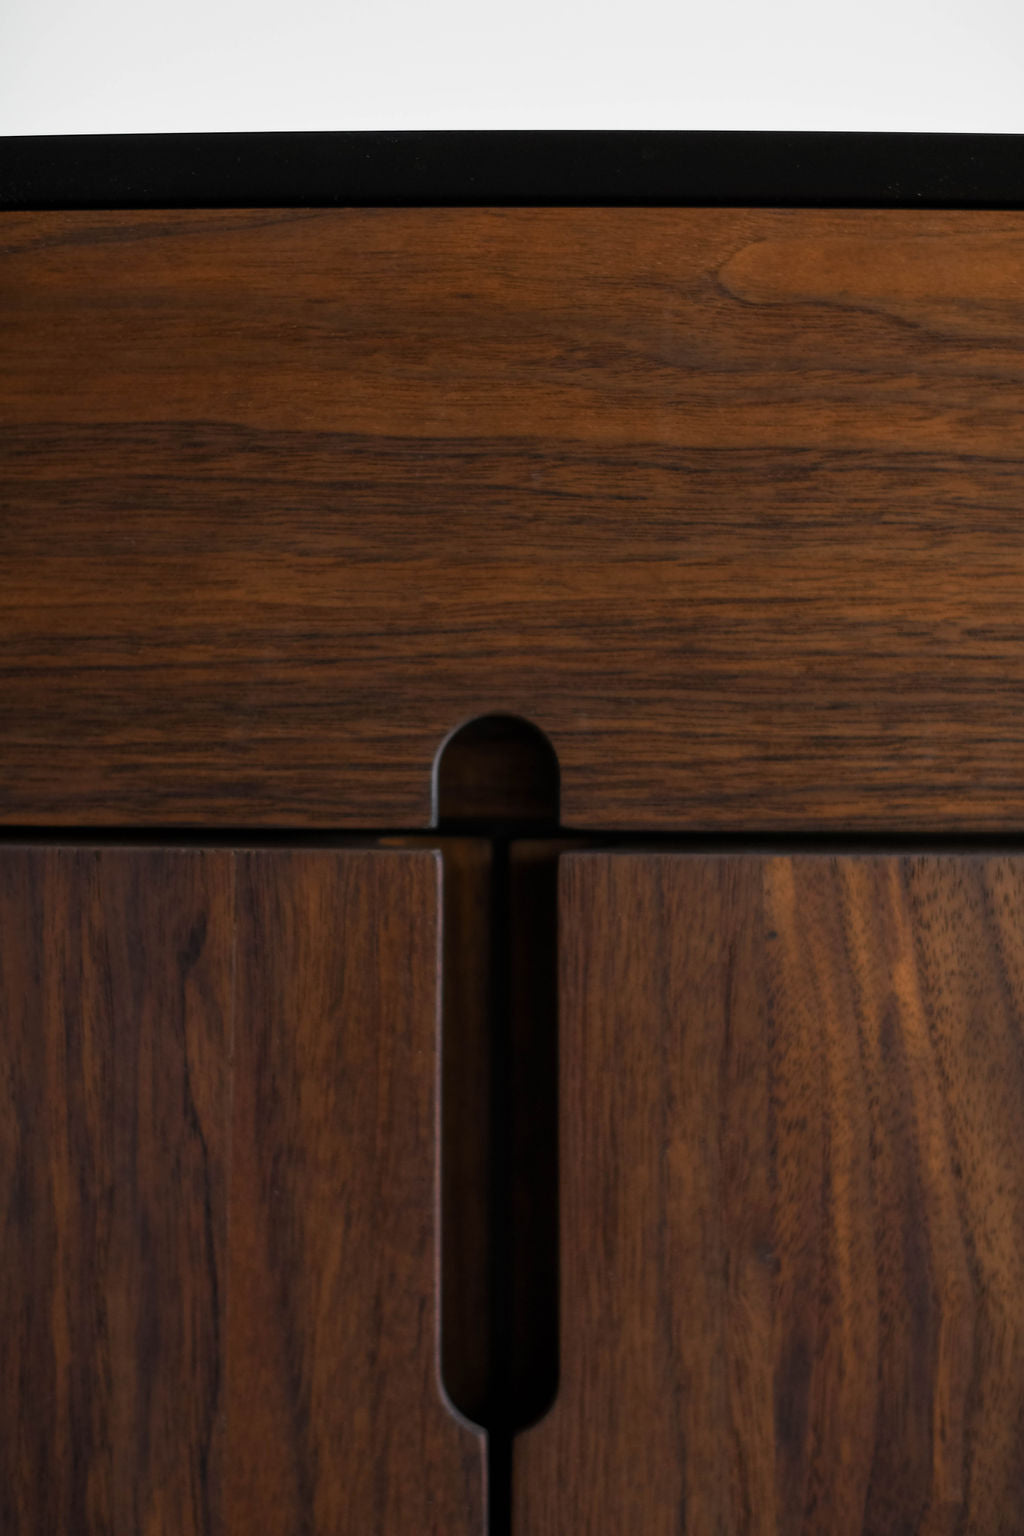 Kings nightstand - steel casing with wood door and drawer